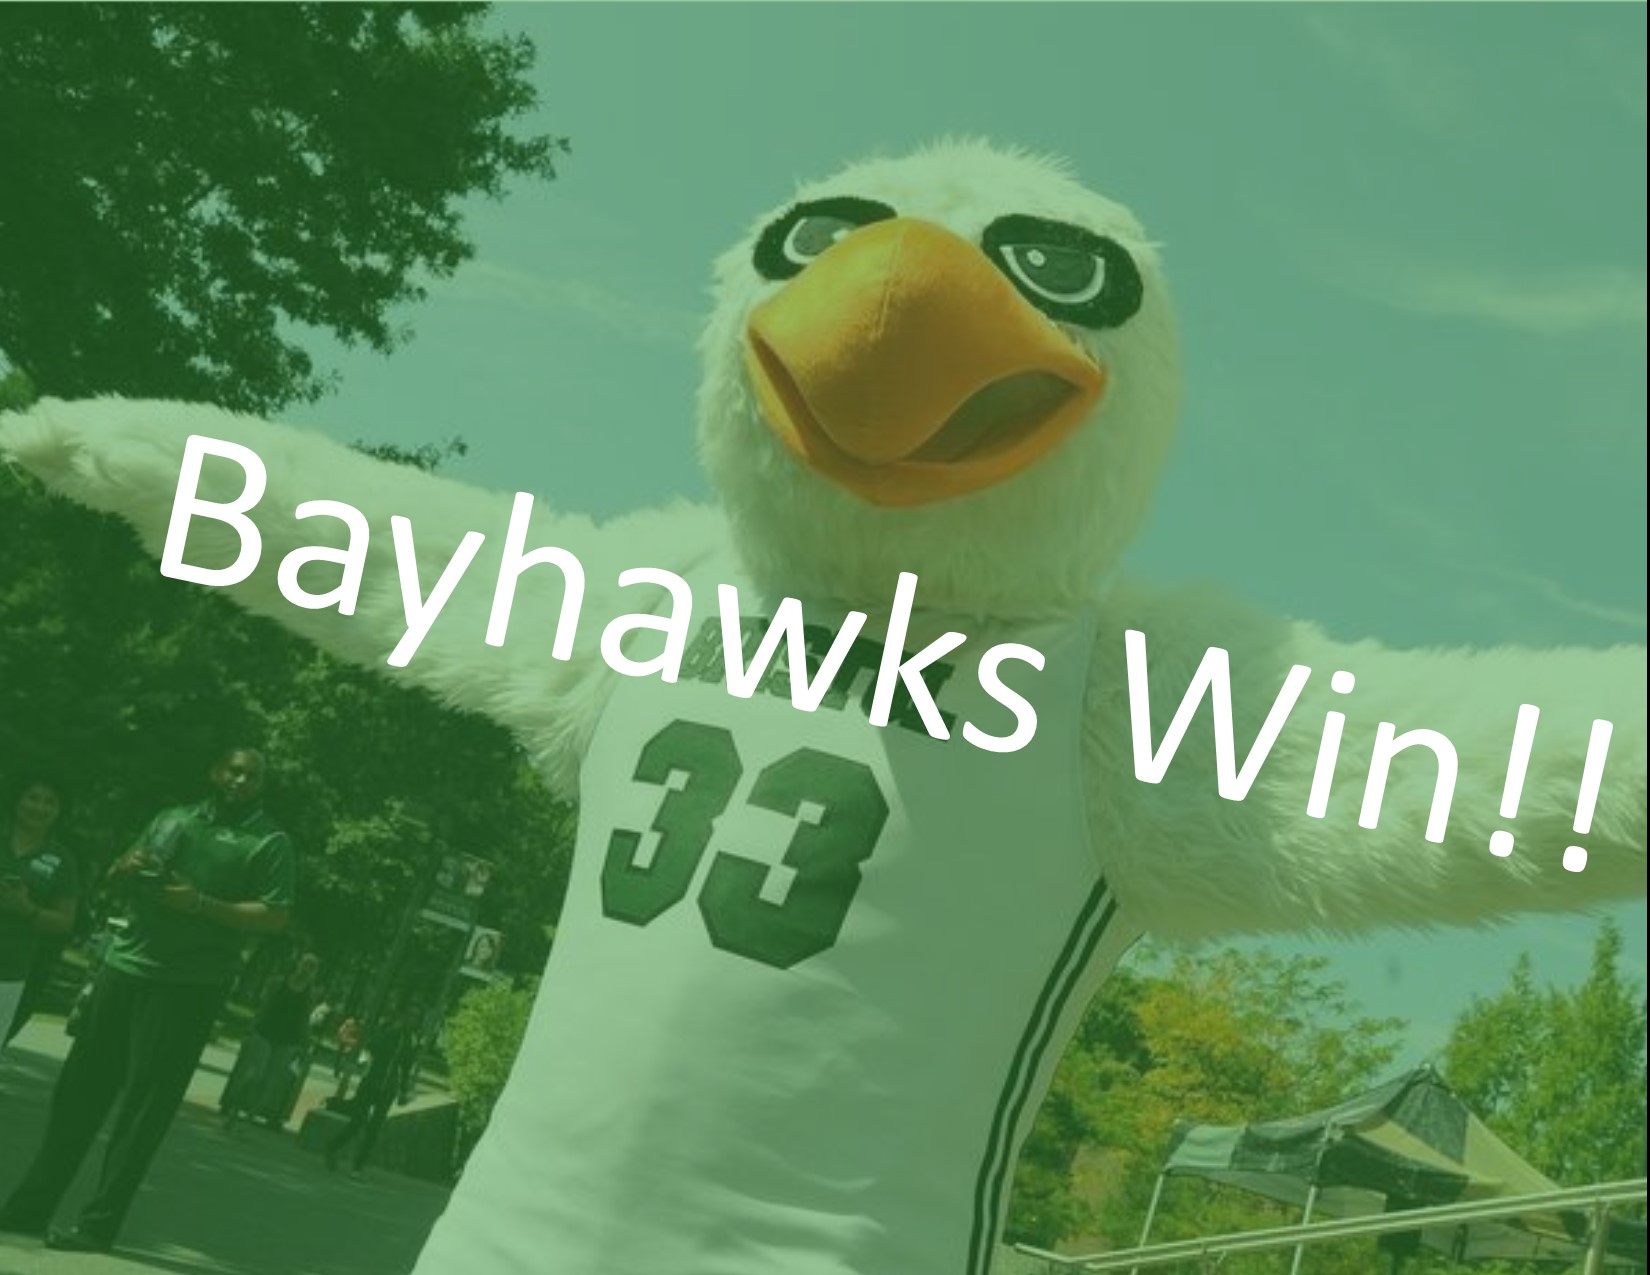 The Bayhawks Earn A Second Win!